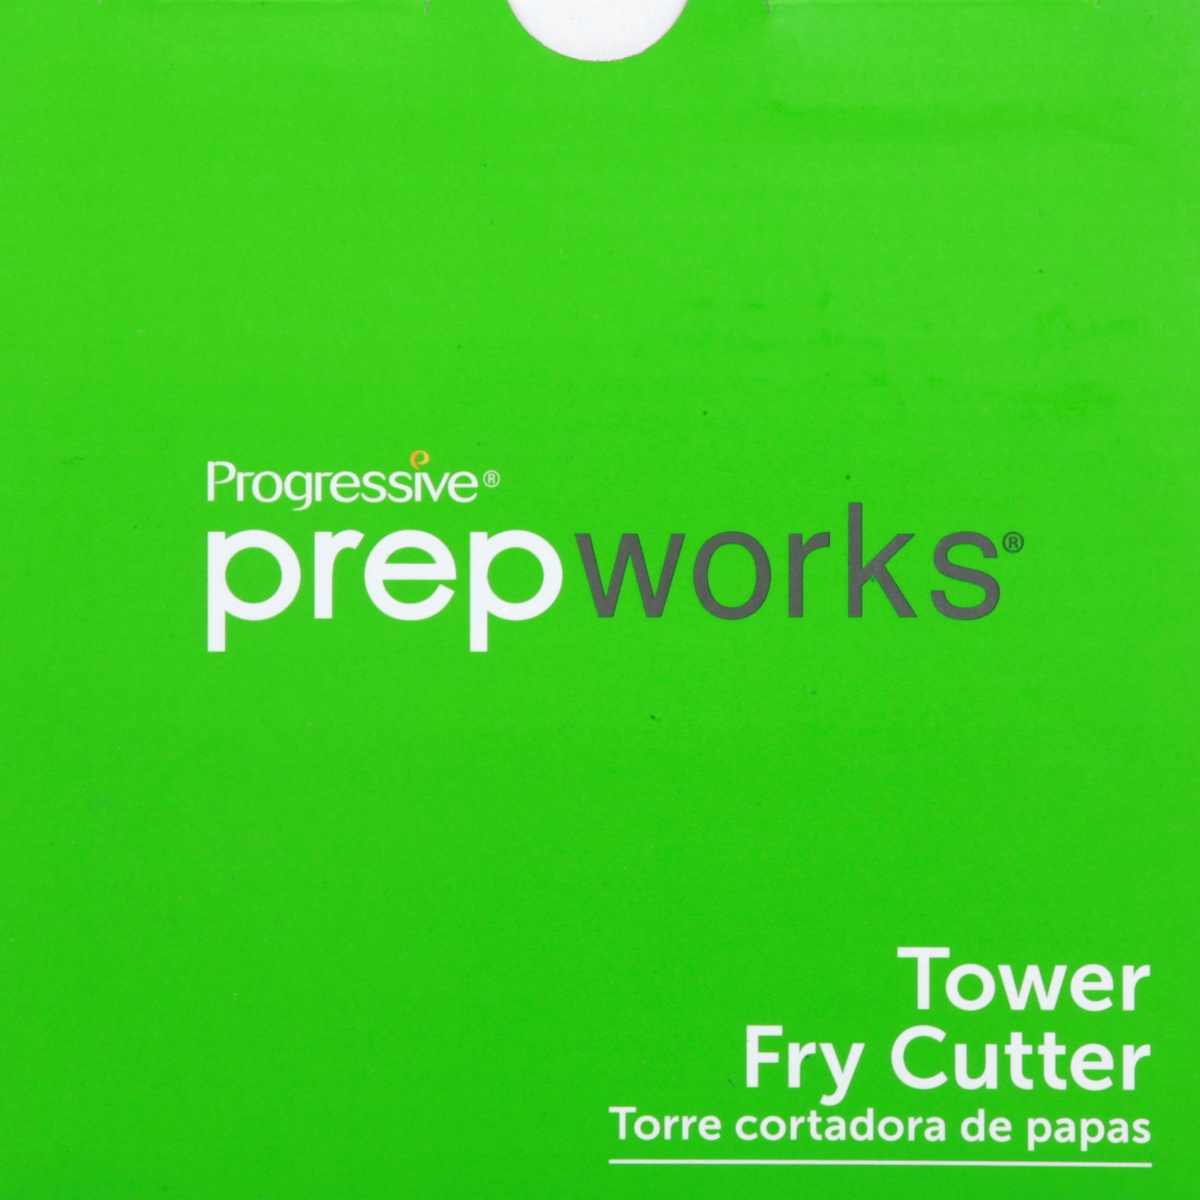 Progressive Tower Fry Cutter